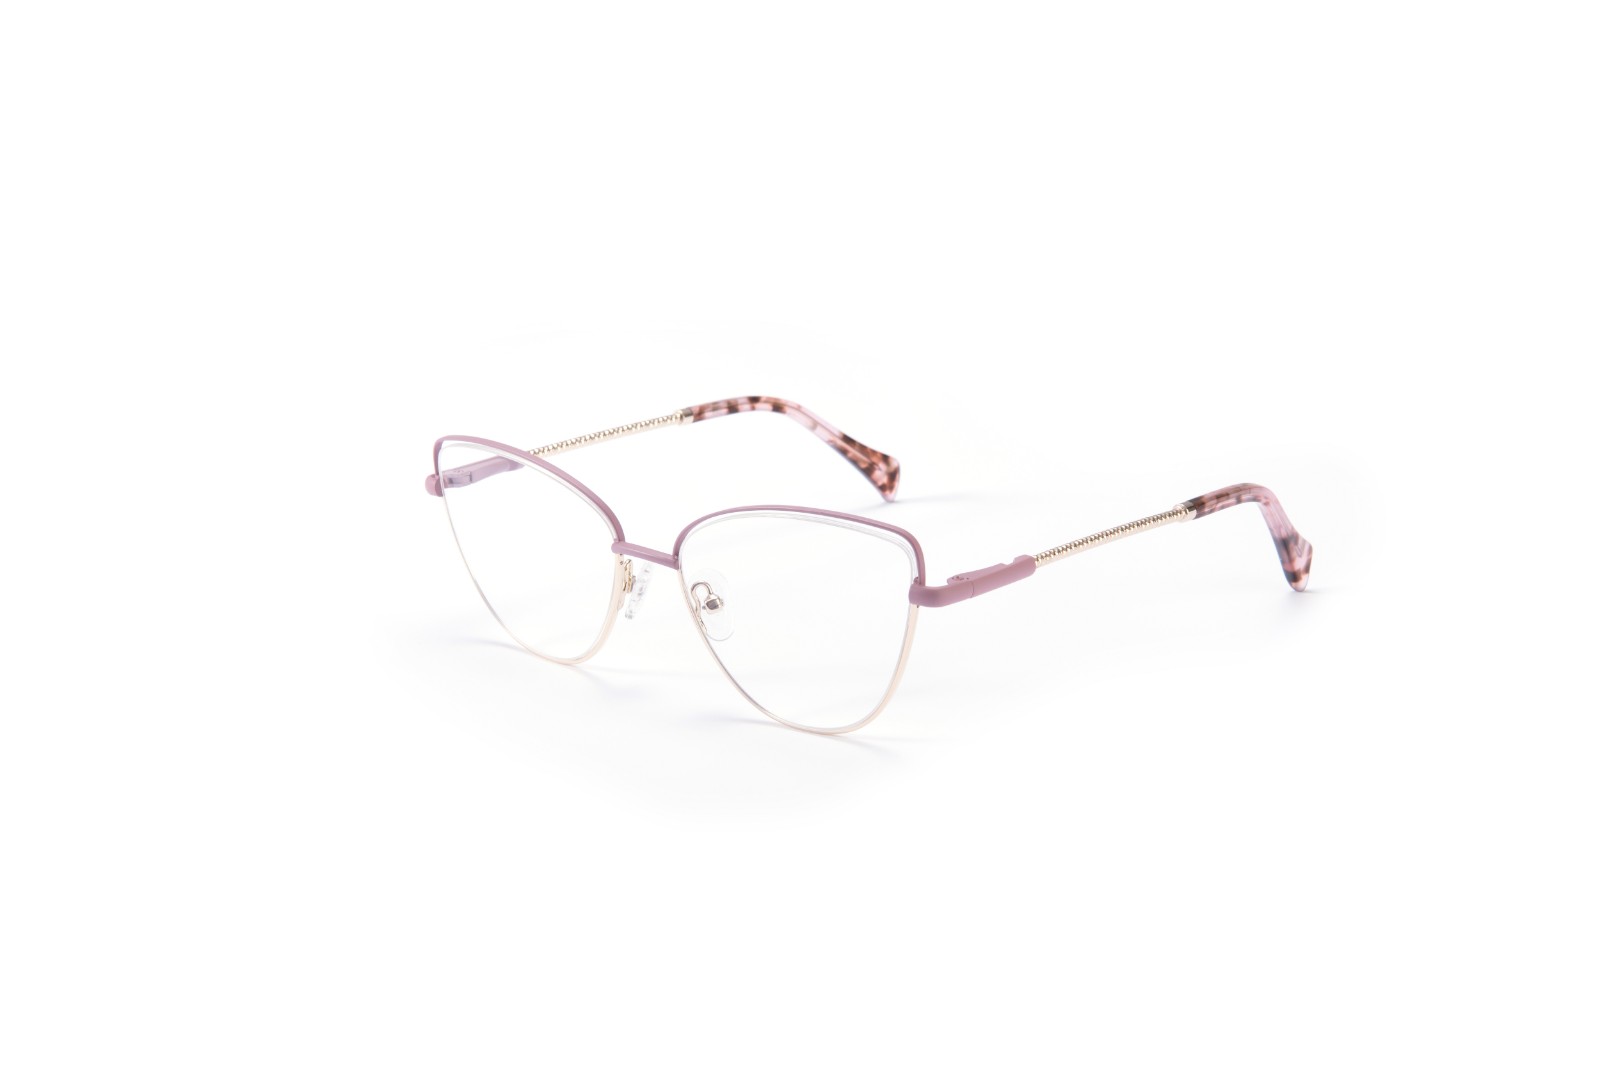 (RTS) EM1101 Metal glasses 2021 wholesale vr/ar glasses optical glass lens mens frames optical glasses with small quantity